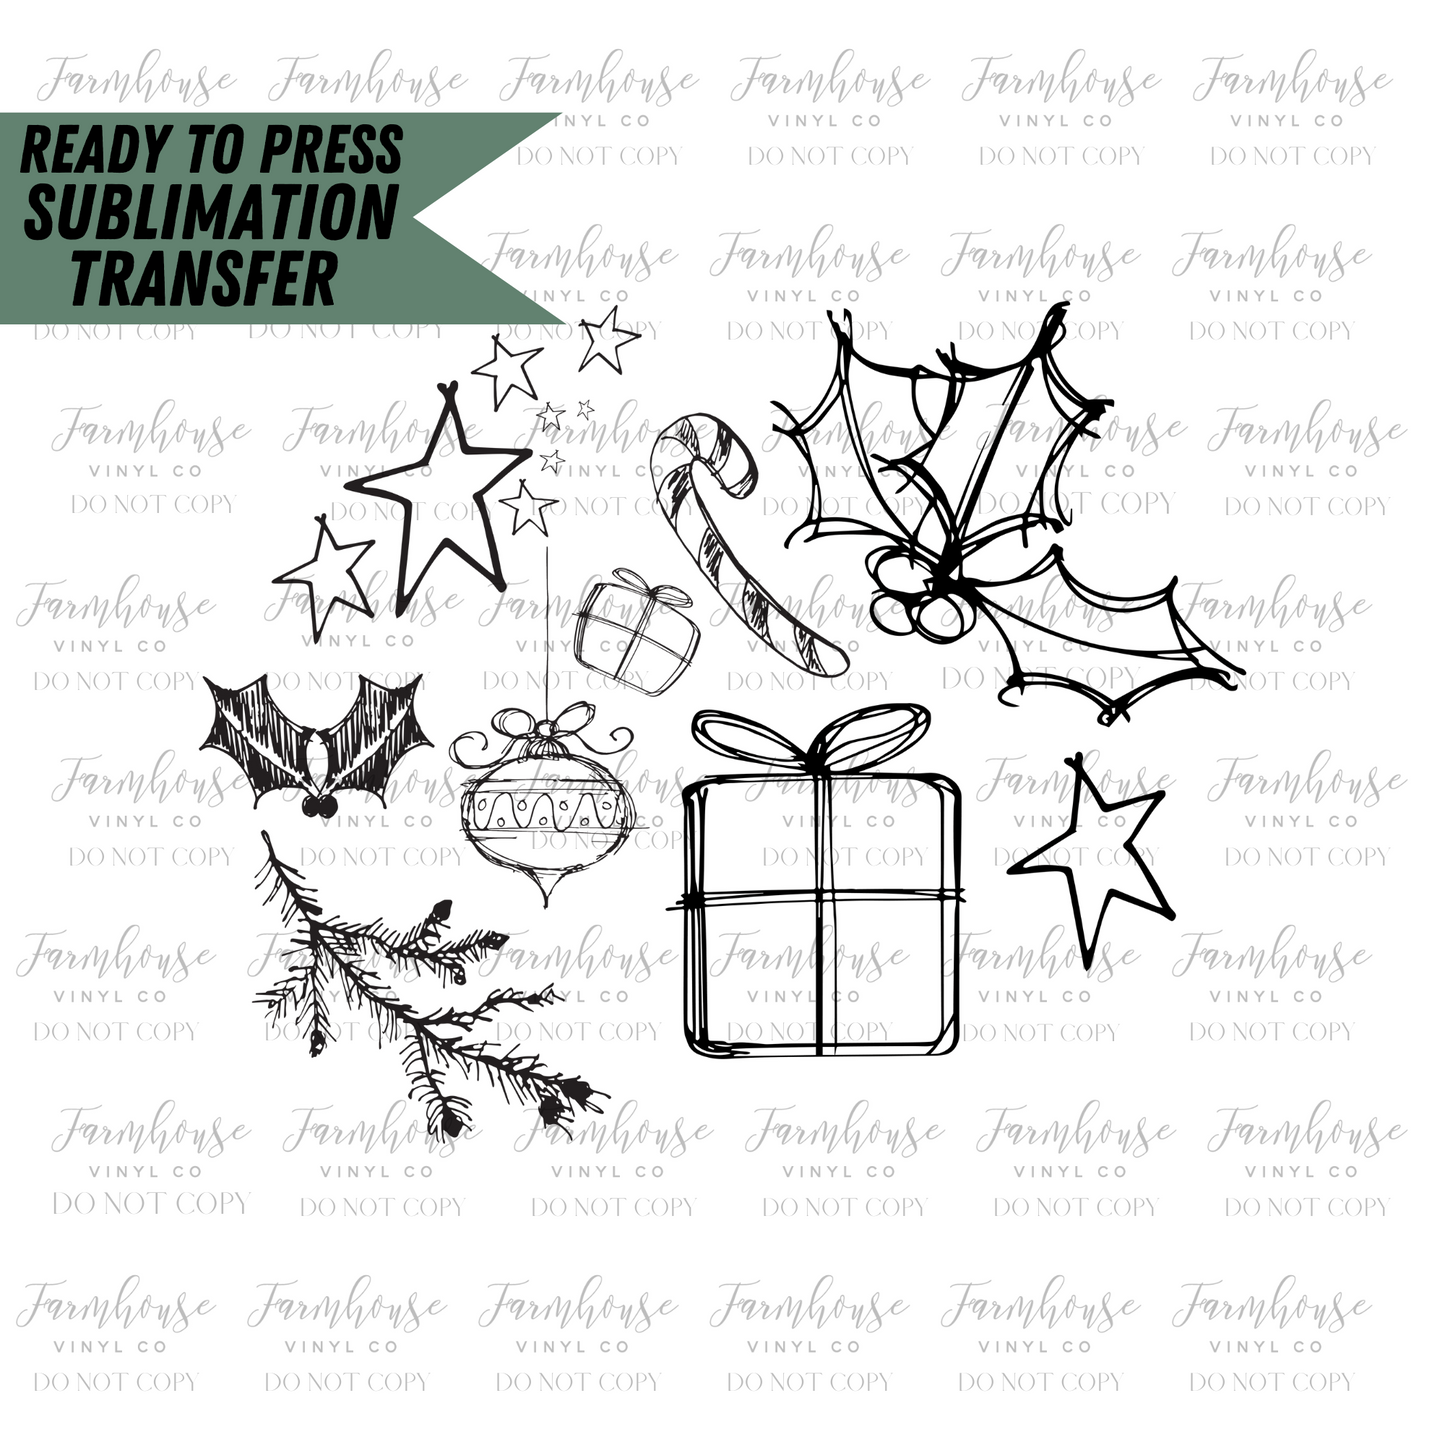 Sketch Christmas Favorite Things Ready To Press Sublimation Transfer - Farmhouse Vinyl Co